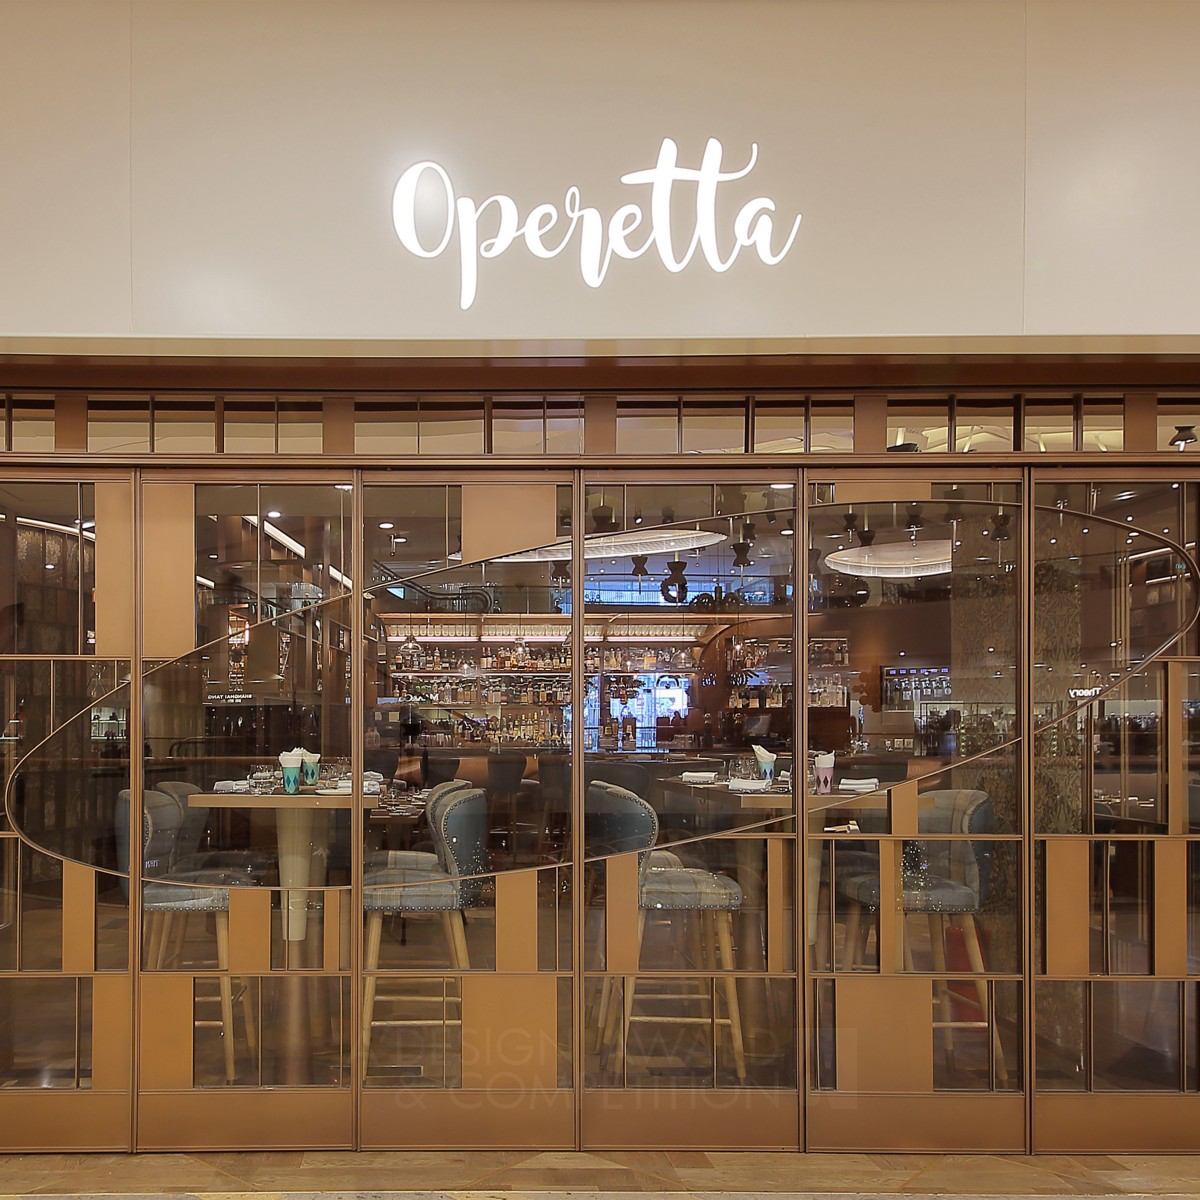 Operetta Restaurant by Monique Lee Iron Interior Space and Exhibition Design Award Winner 2018 